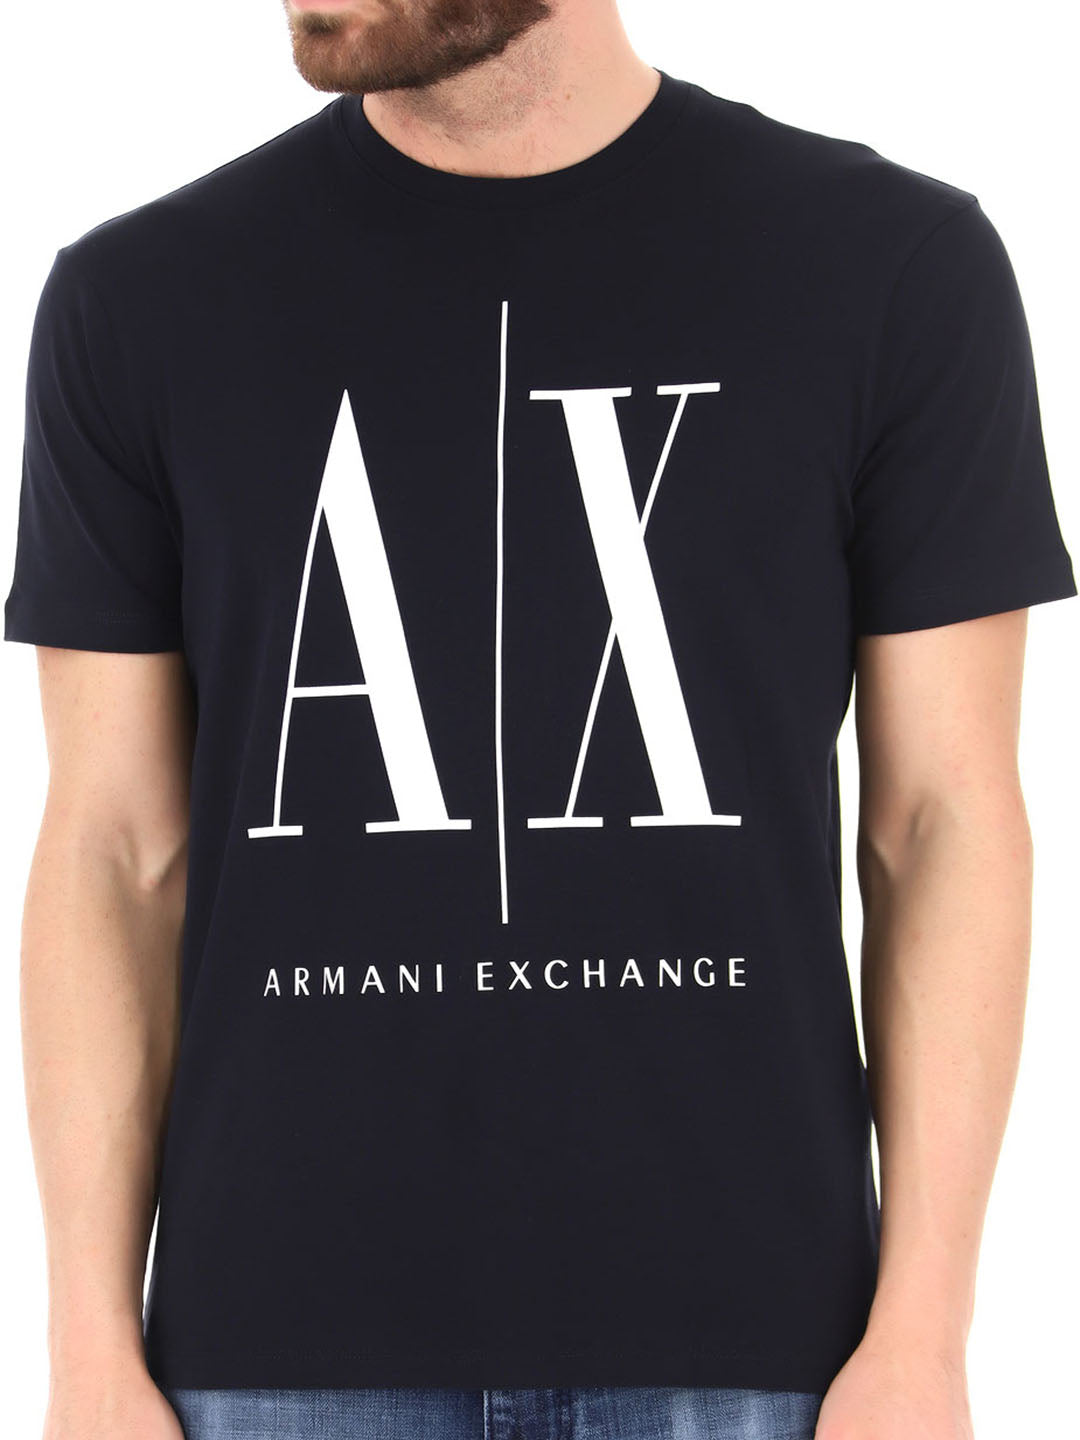 ARMANI EXCHANGE blue navy/white cotton T-shirt